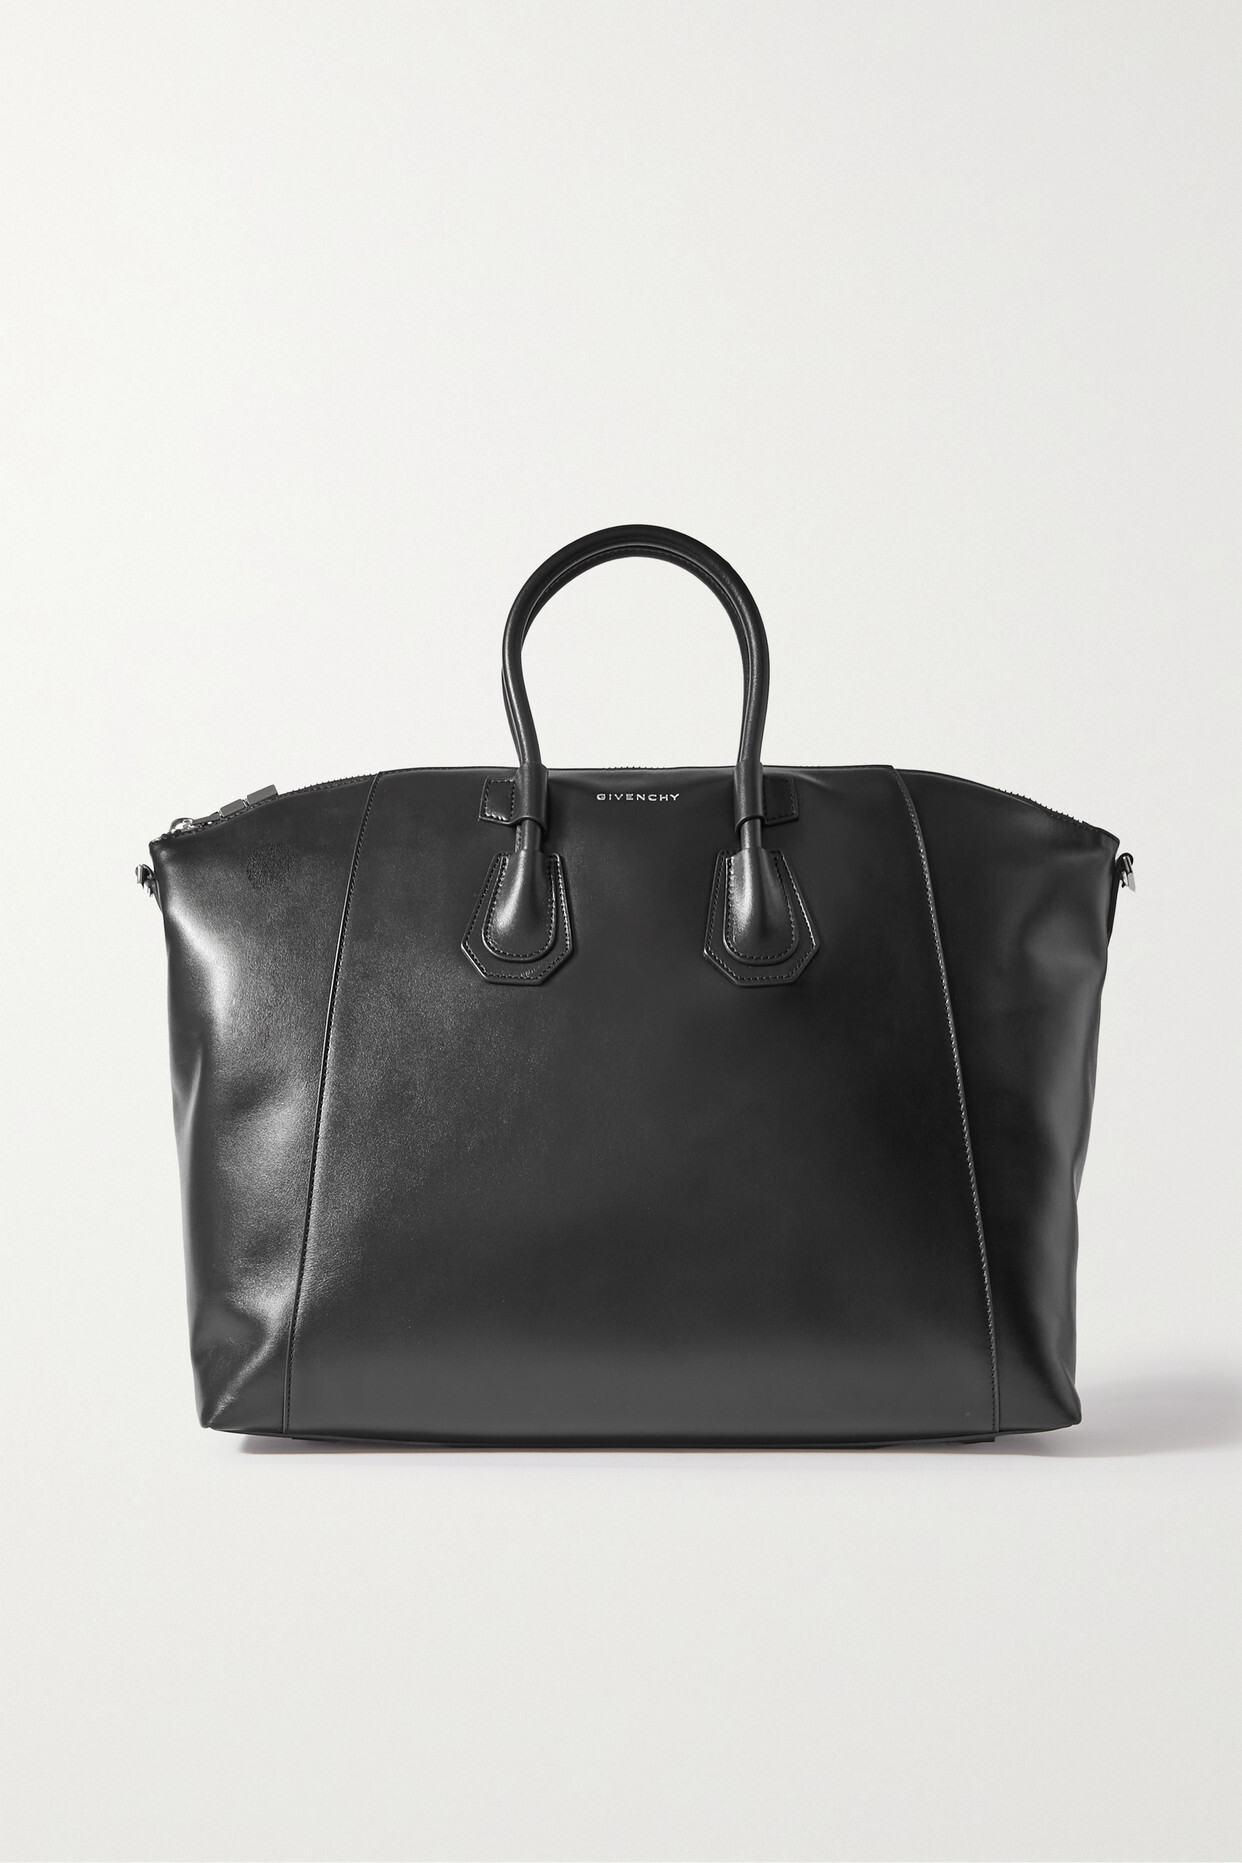 Givenchy - Antigona Sport Medium Leather Tote Bag - Black